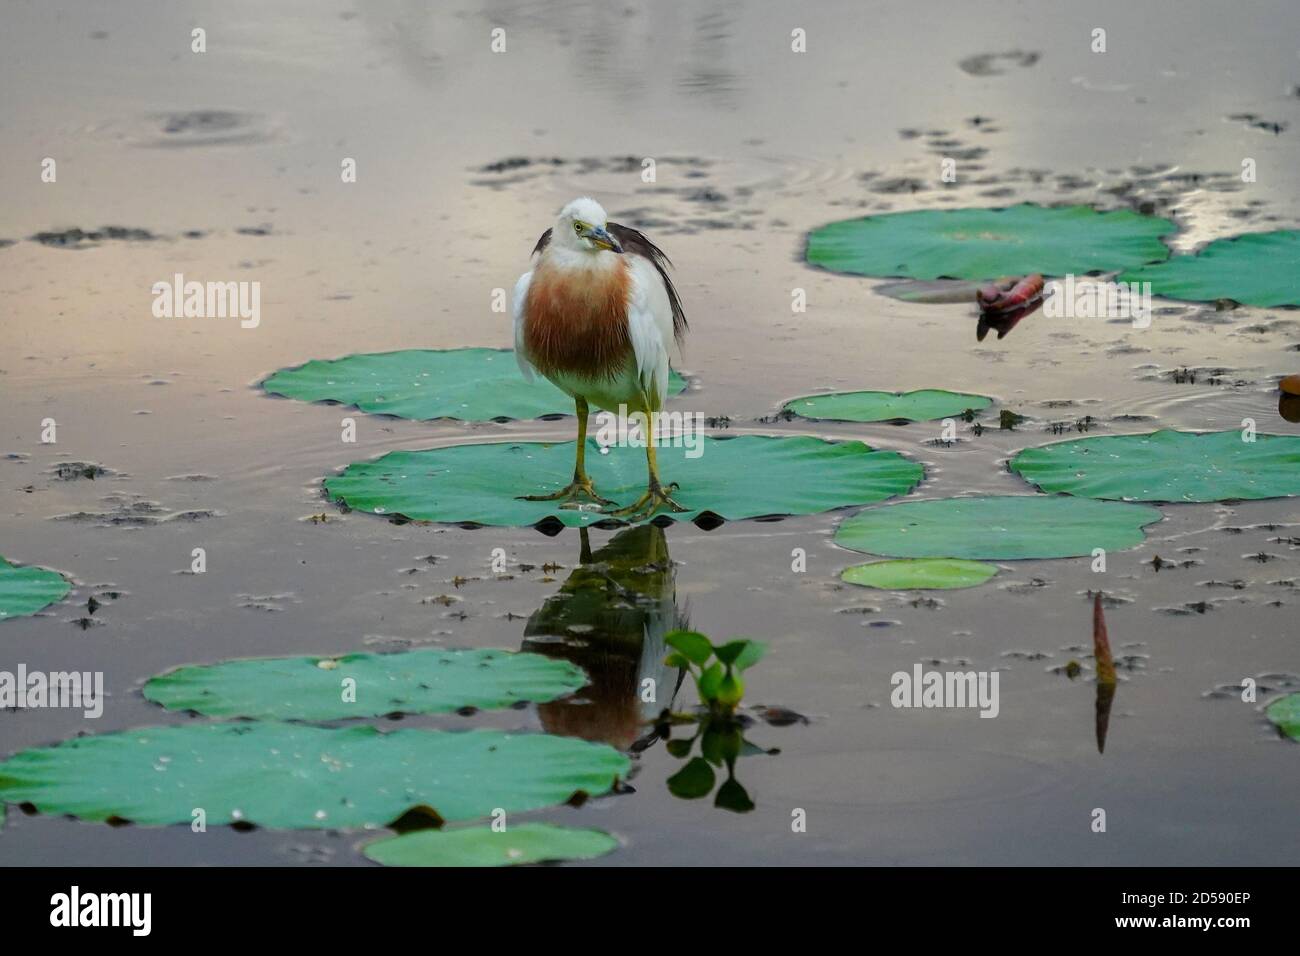 Bird standing on a lily pad, Lebo lake, Sumbawa, Indonesia Stock Photo